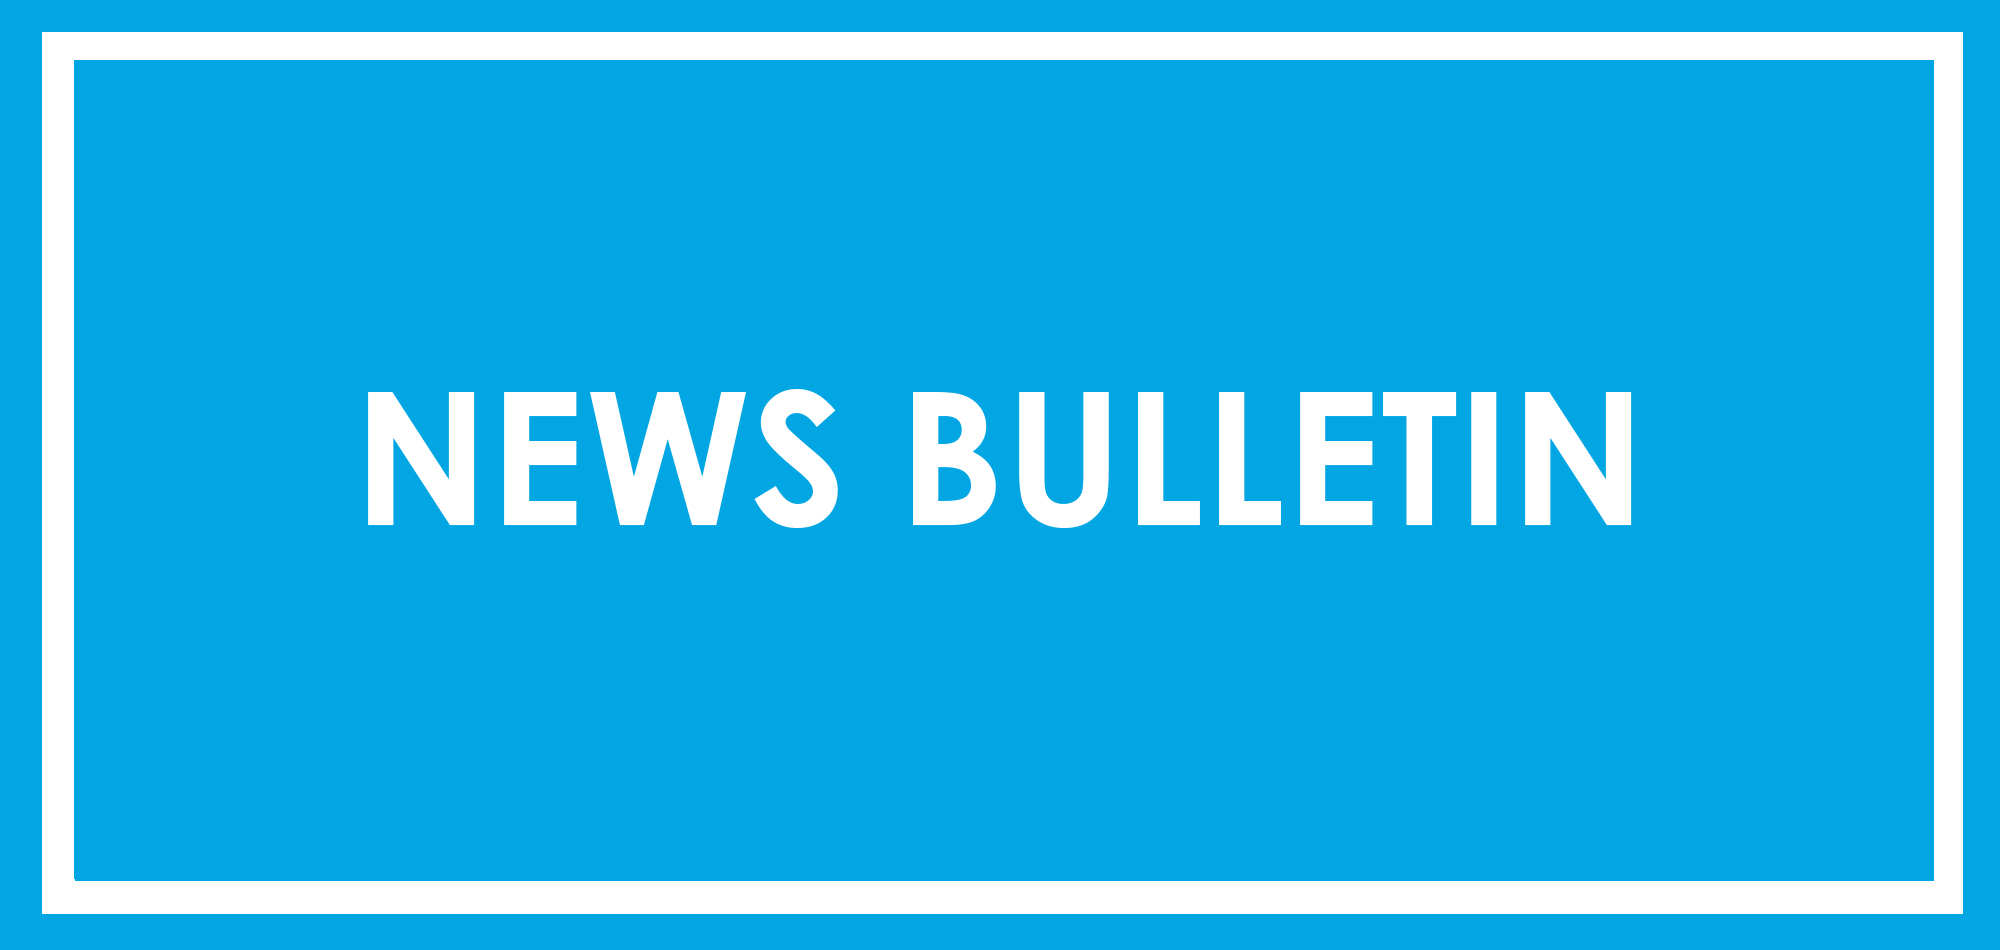 News Bulletin - 30.11.21